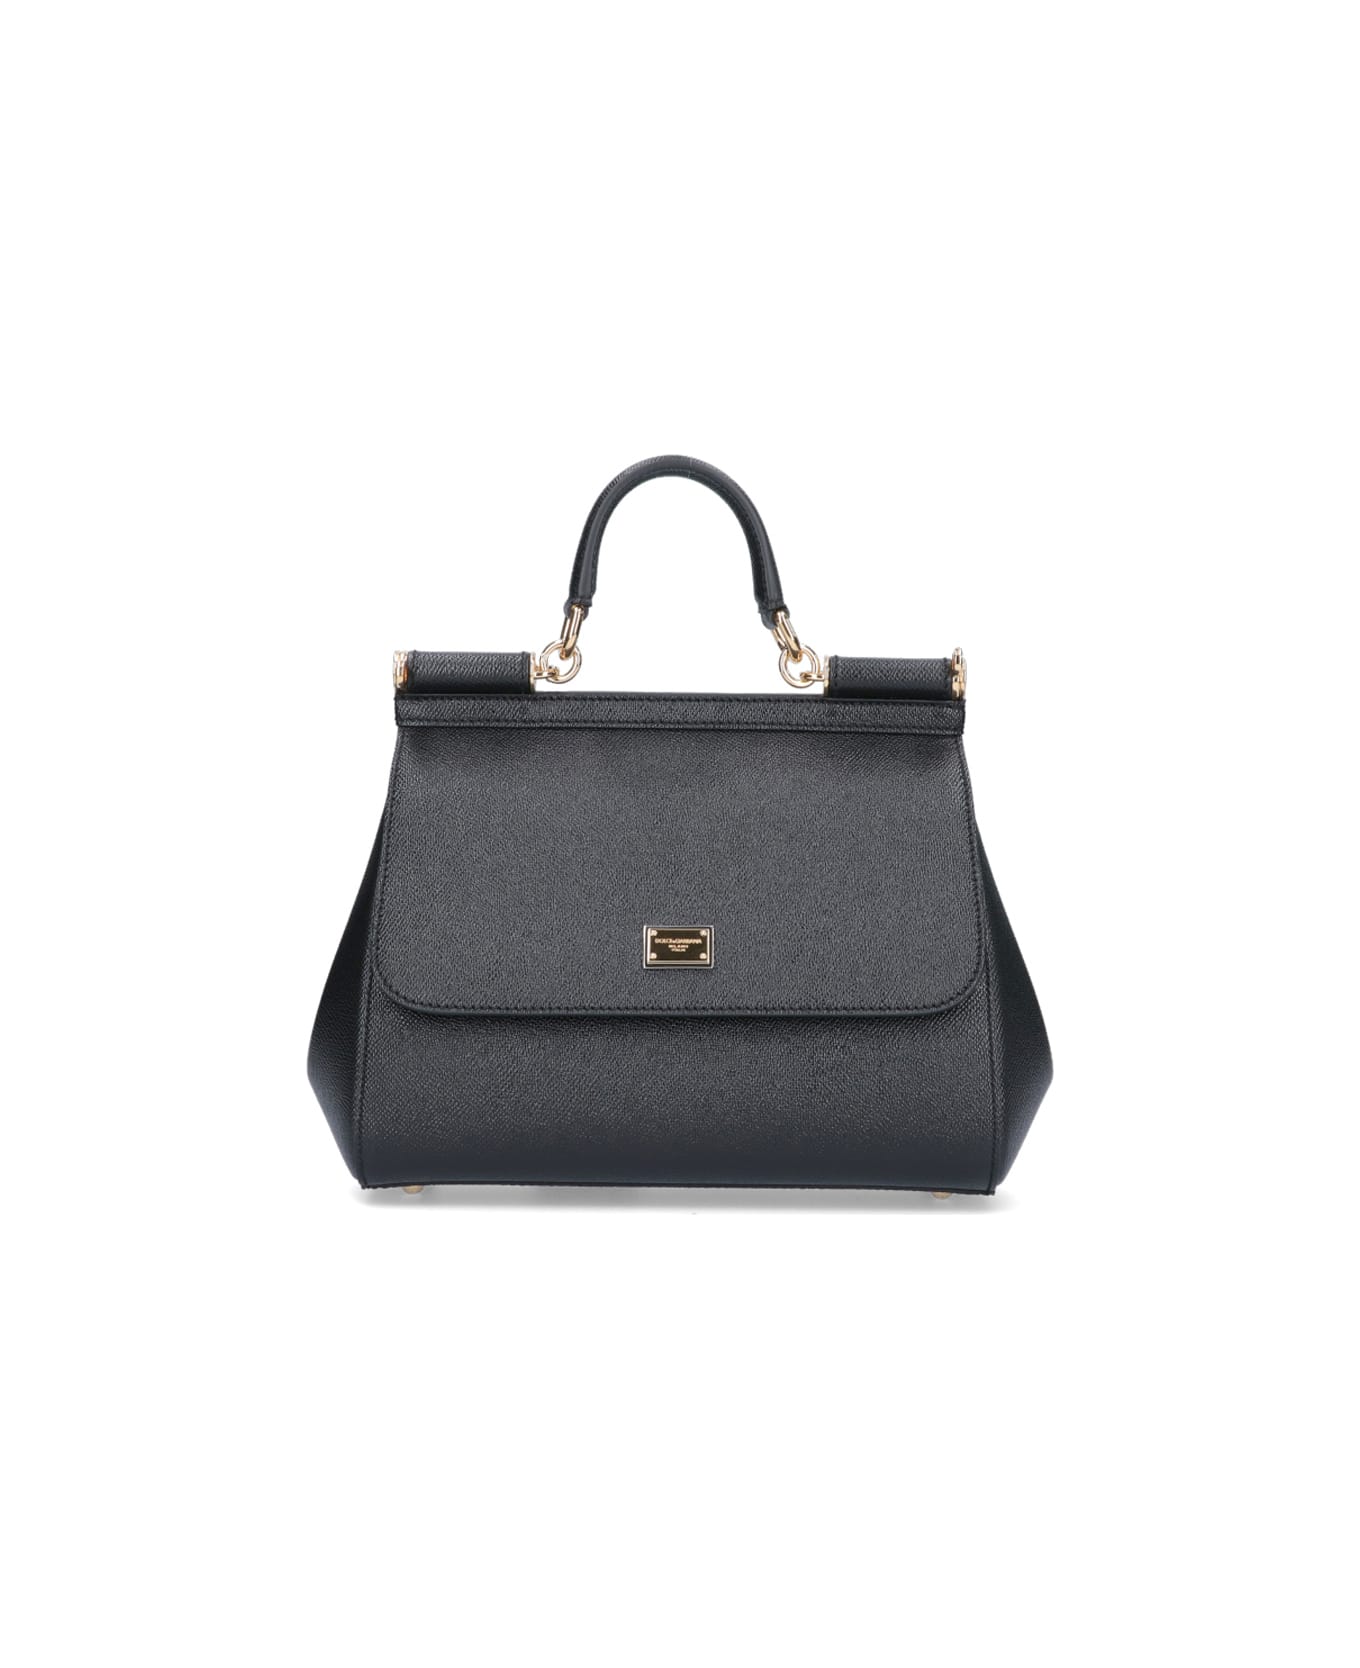 Dolce & Gabbana - Medium Sicily Bag - Black  